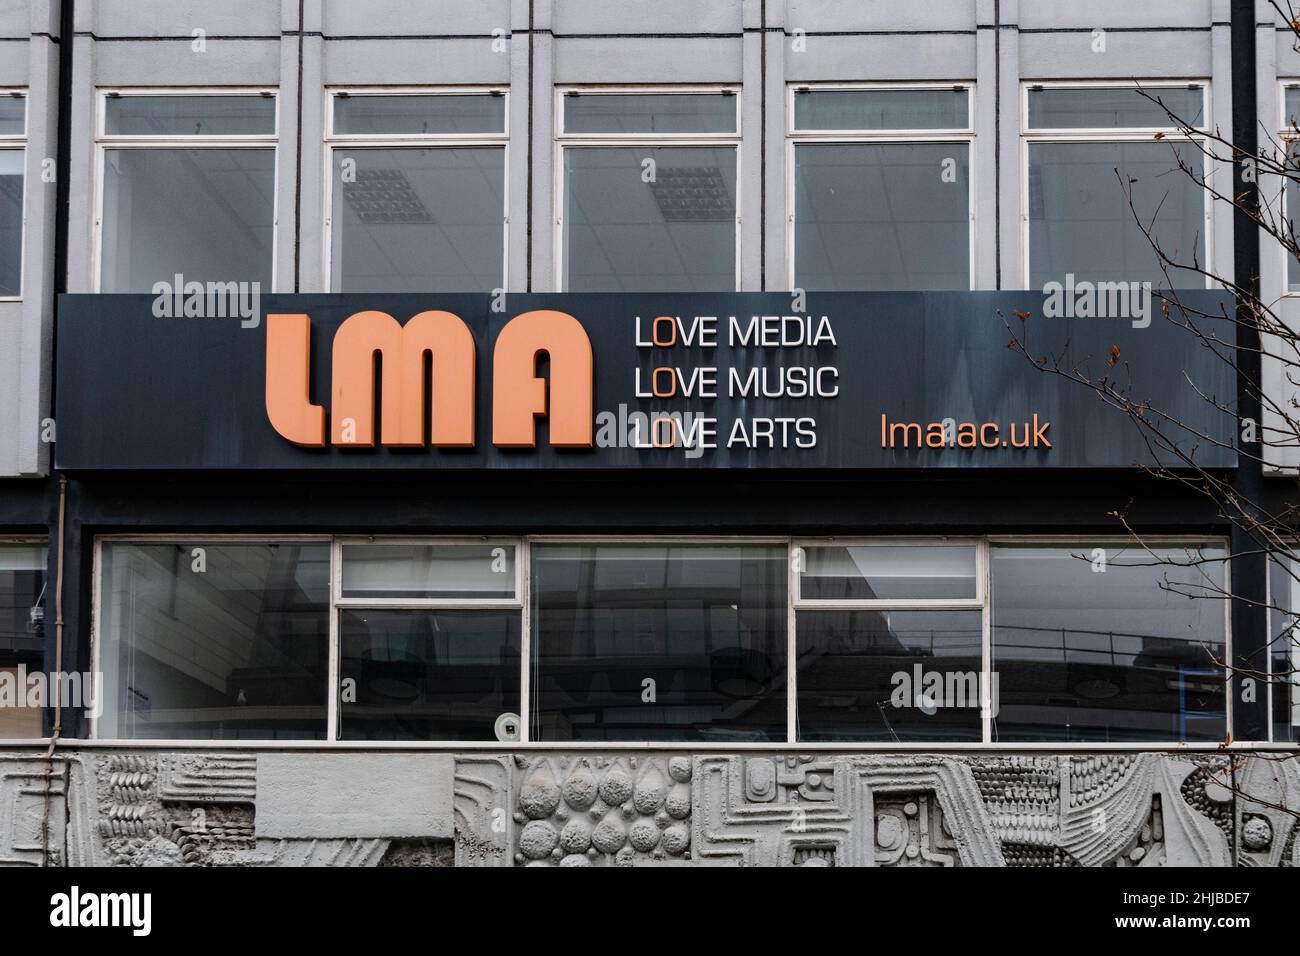 LMA - Love Media Love Music Love arts - Stock Photo